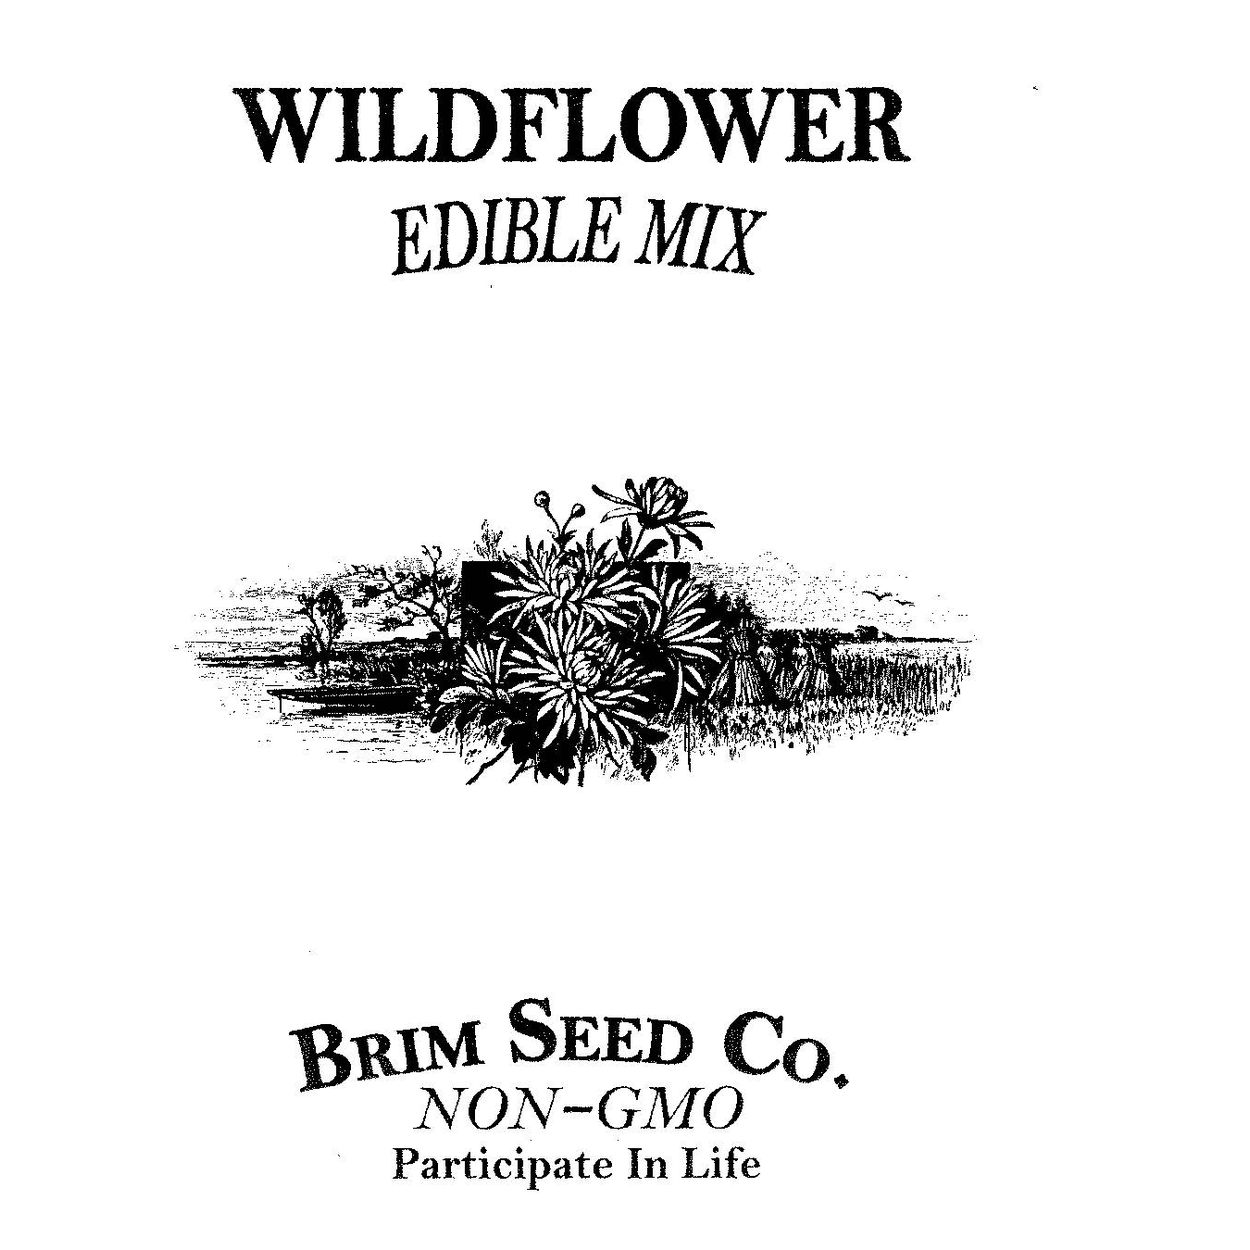 Brim Seed Co. - Edible Mix Wildflower Seed